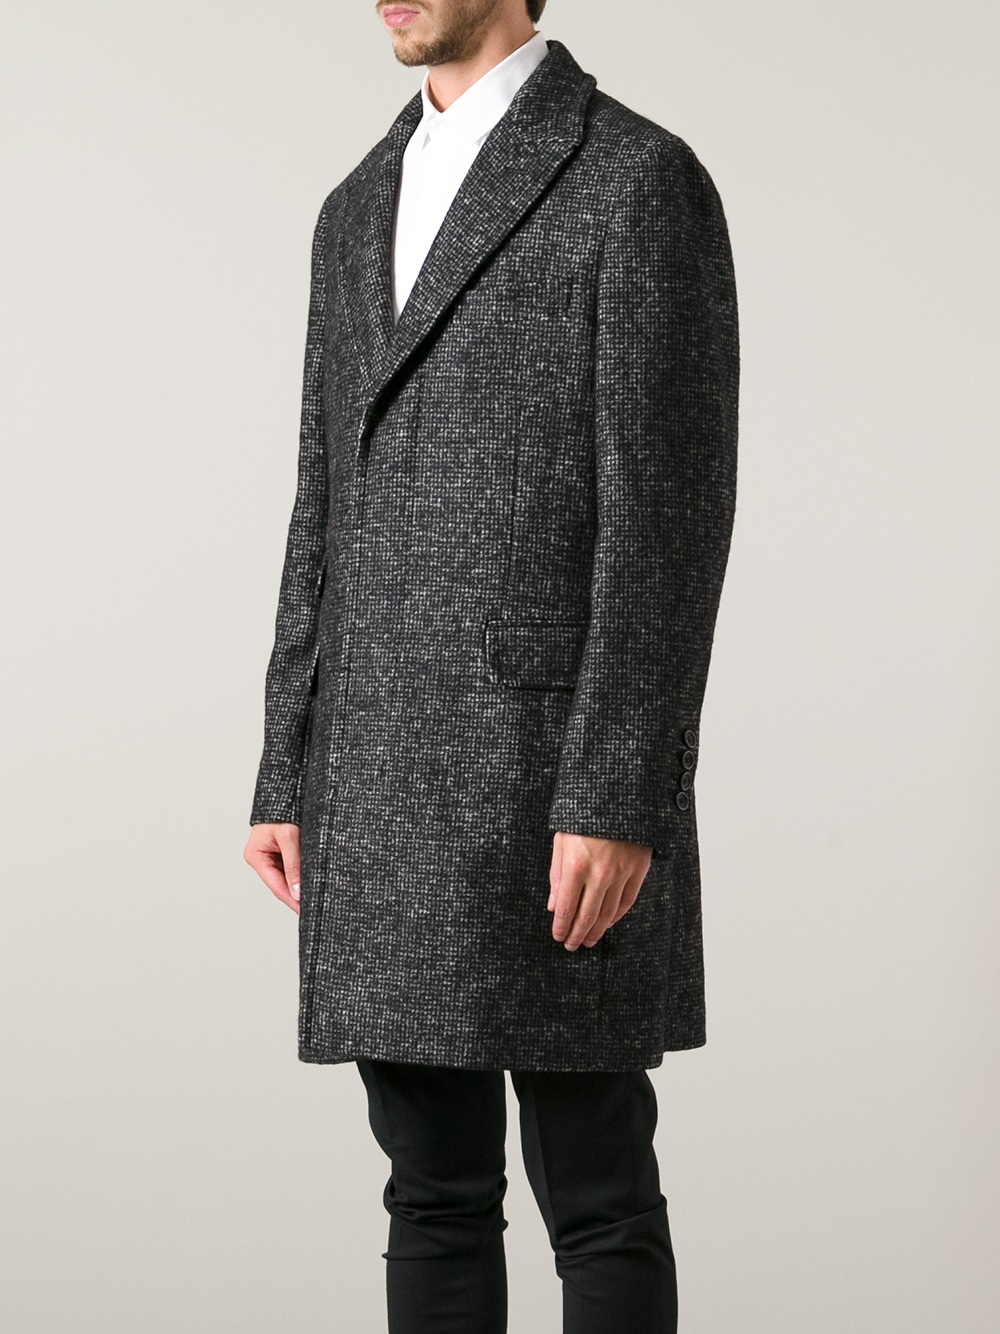 Lyst - Gx1983 Check Alpaca-Wool Coat in Black for Men